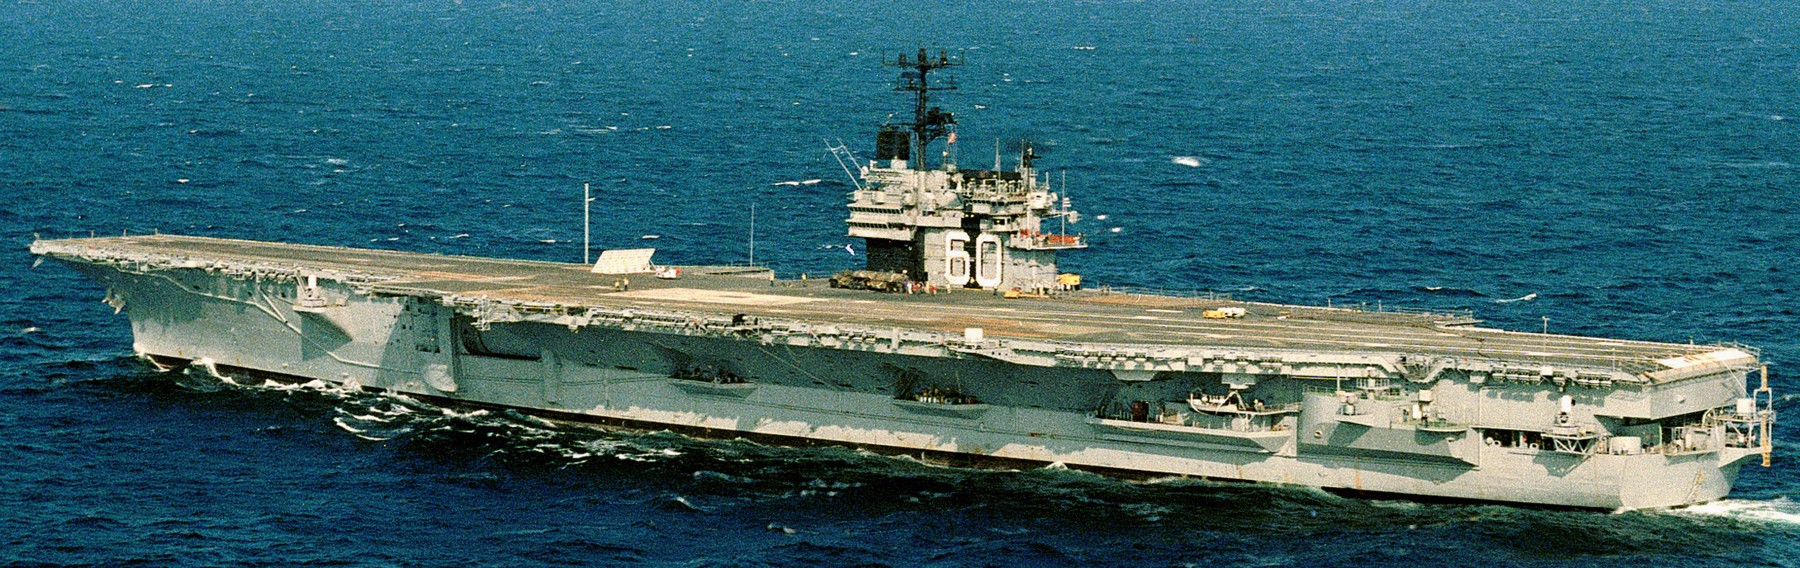 cv-60 uss saratoga forrestal class aircraft carrier us navy 57